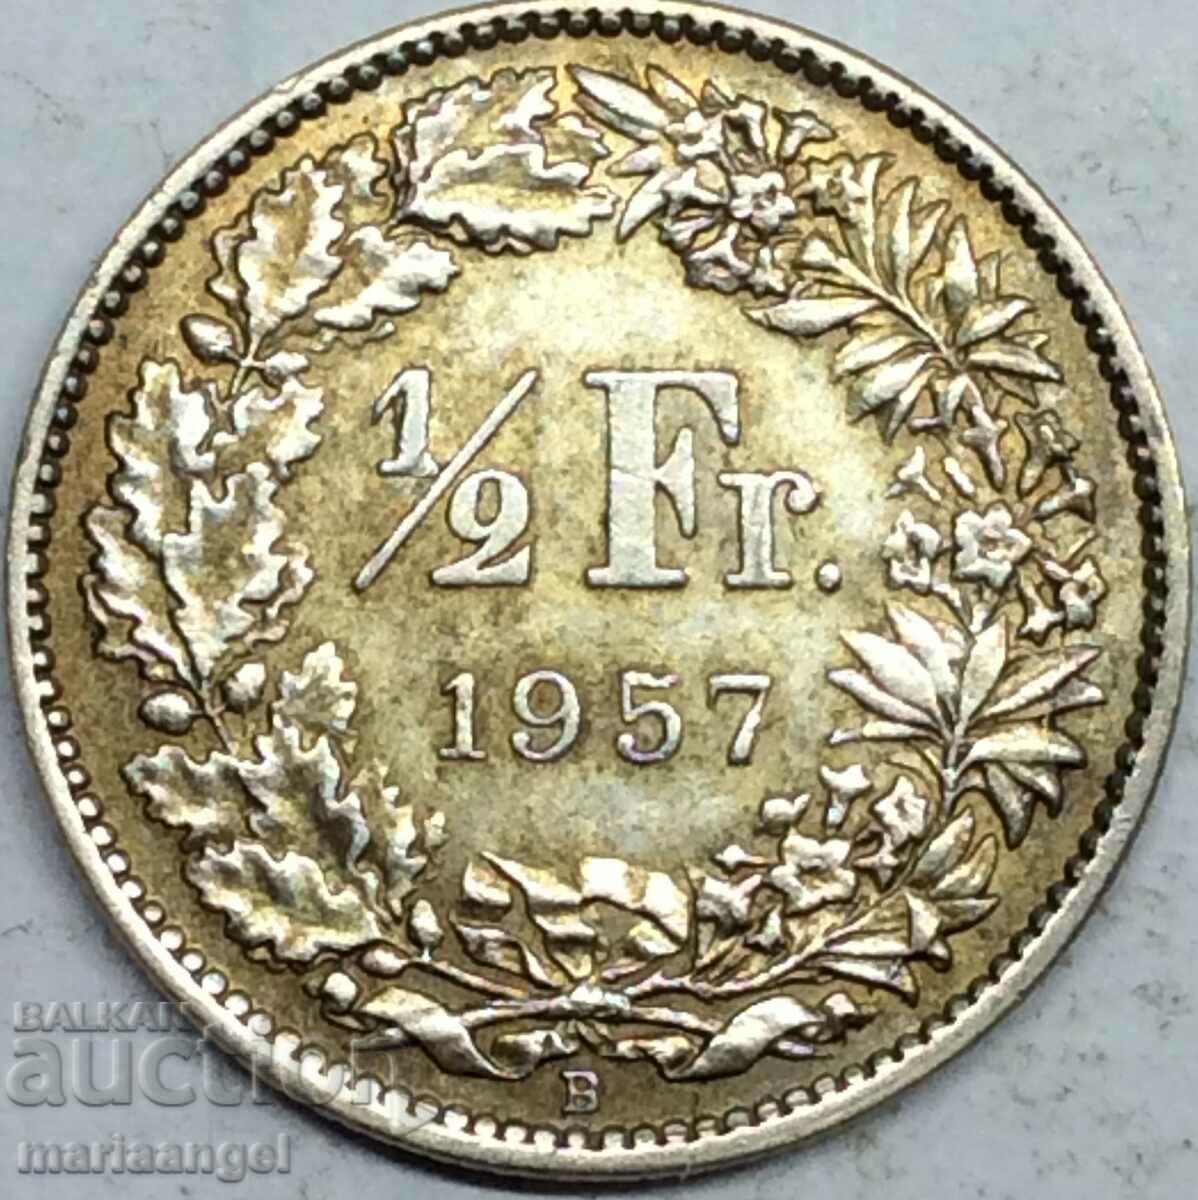 1/2 франк 1959 Швейцария Хелвеция сребро